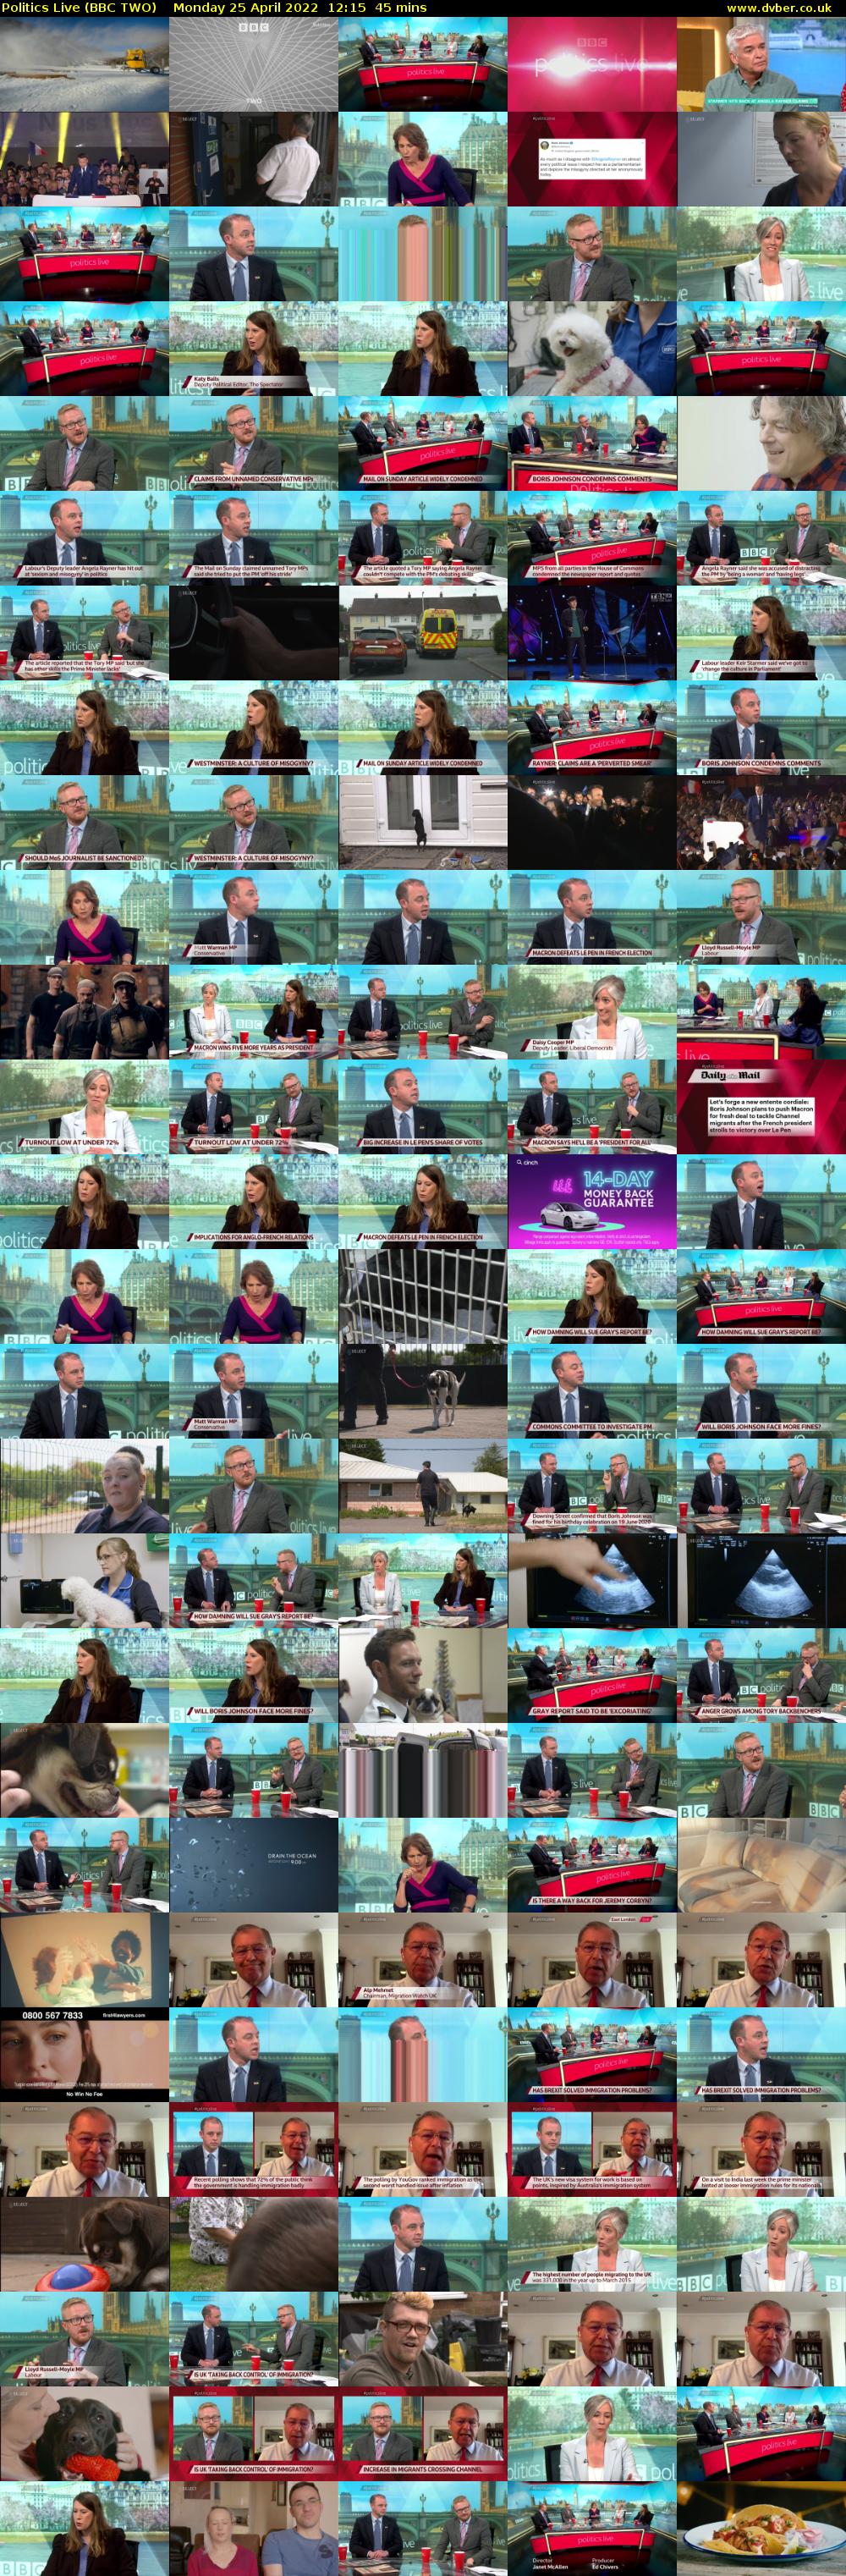 Politics Live (BBC TWO) Monday 25 April 2022 12:15 - 13:00